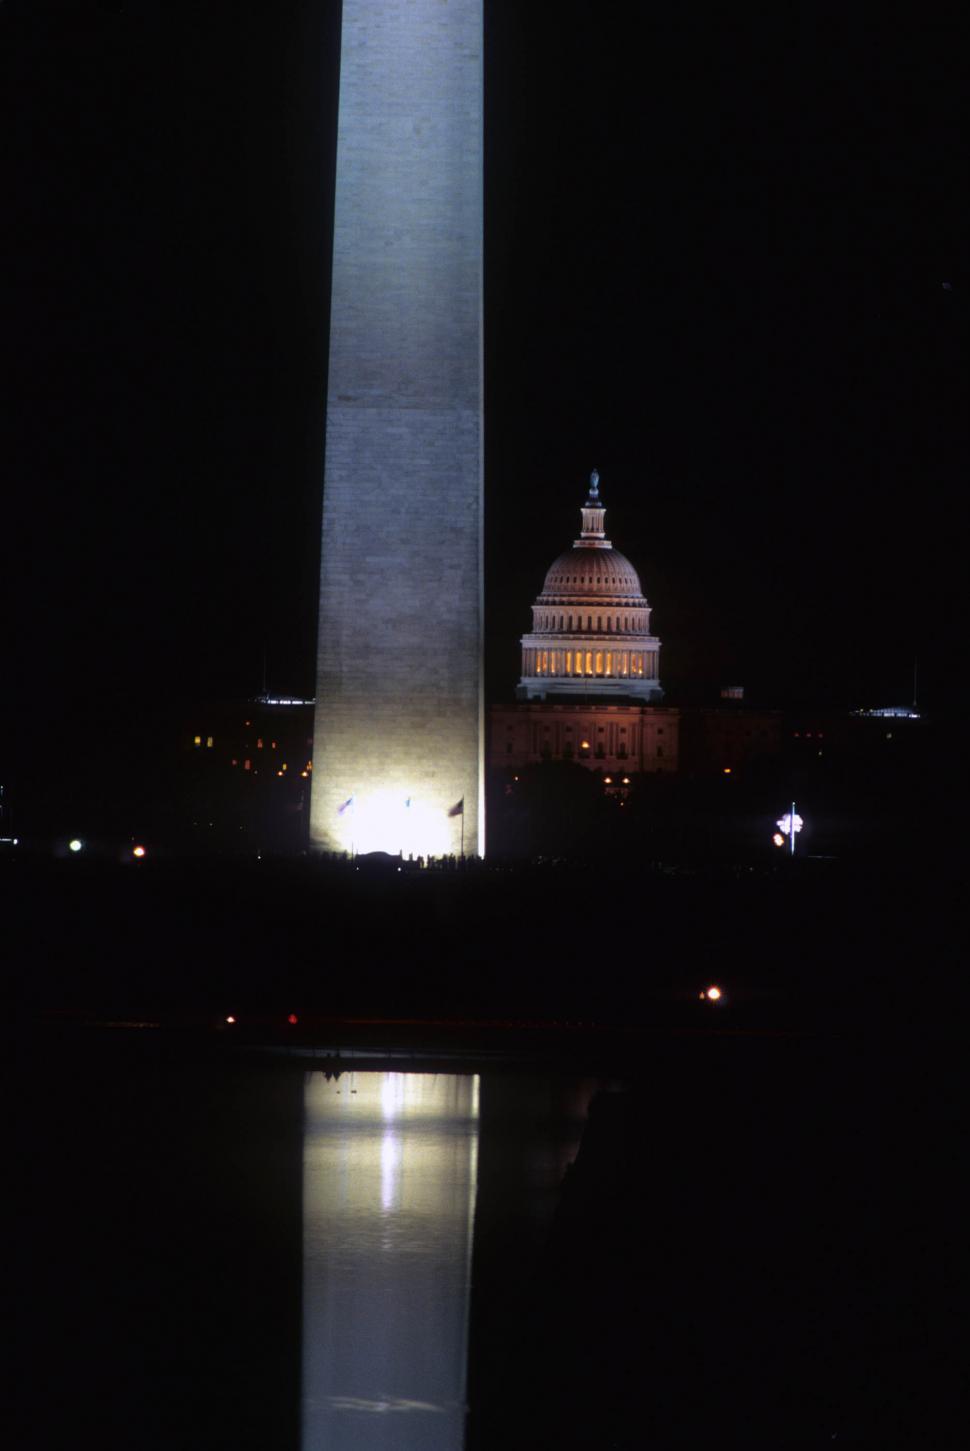 Free Image of Washington D.C. at night 